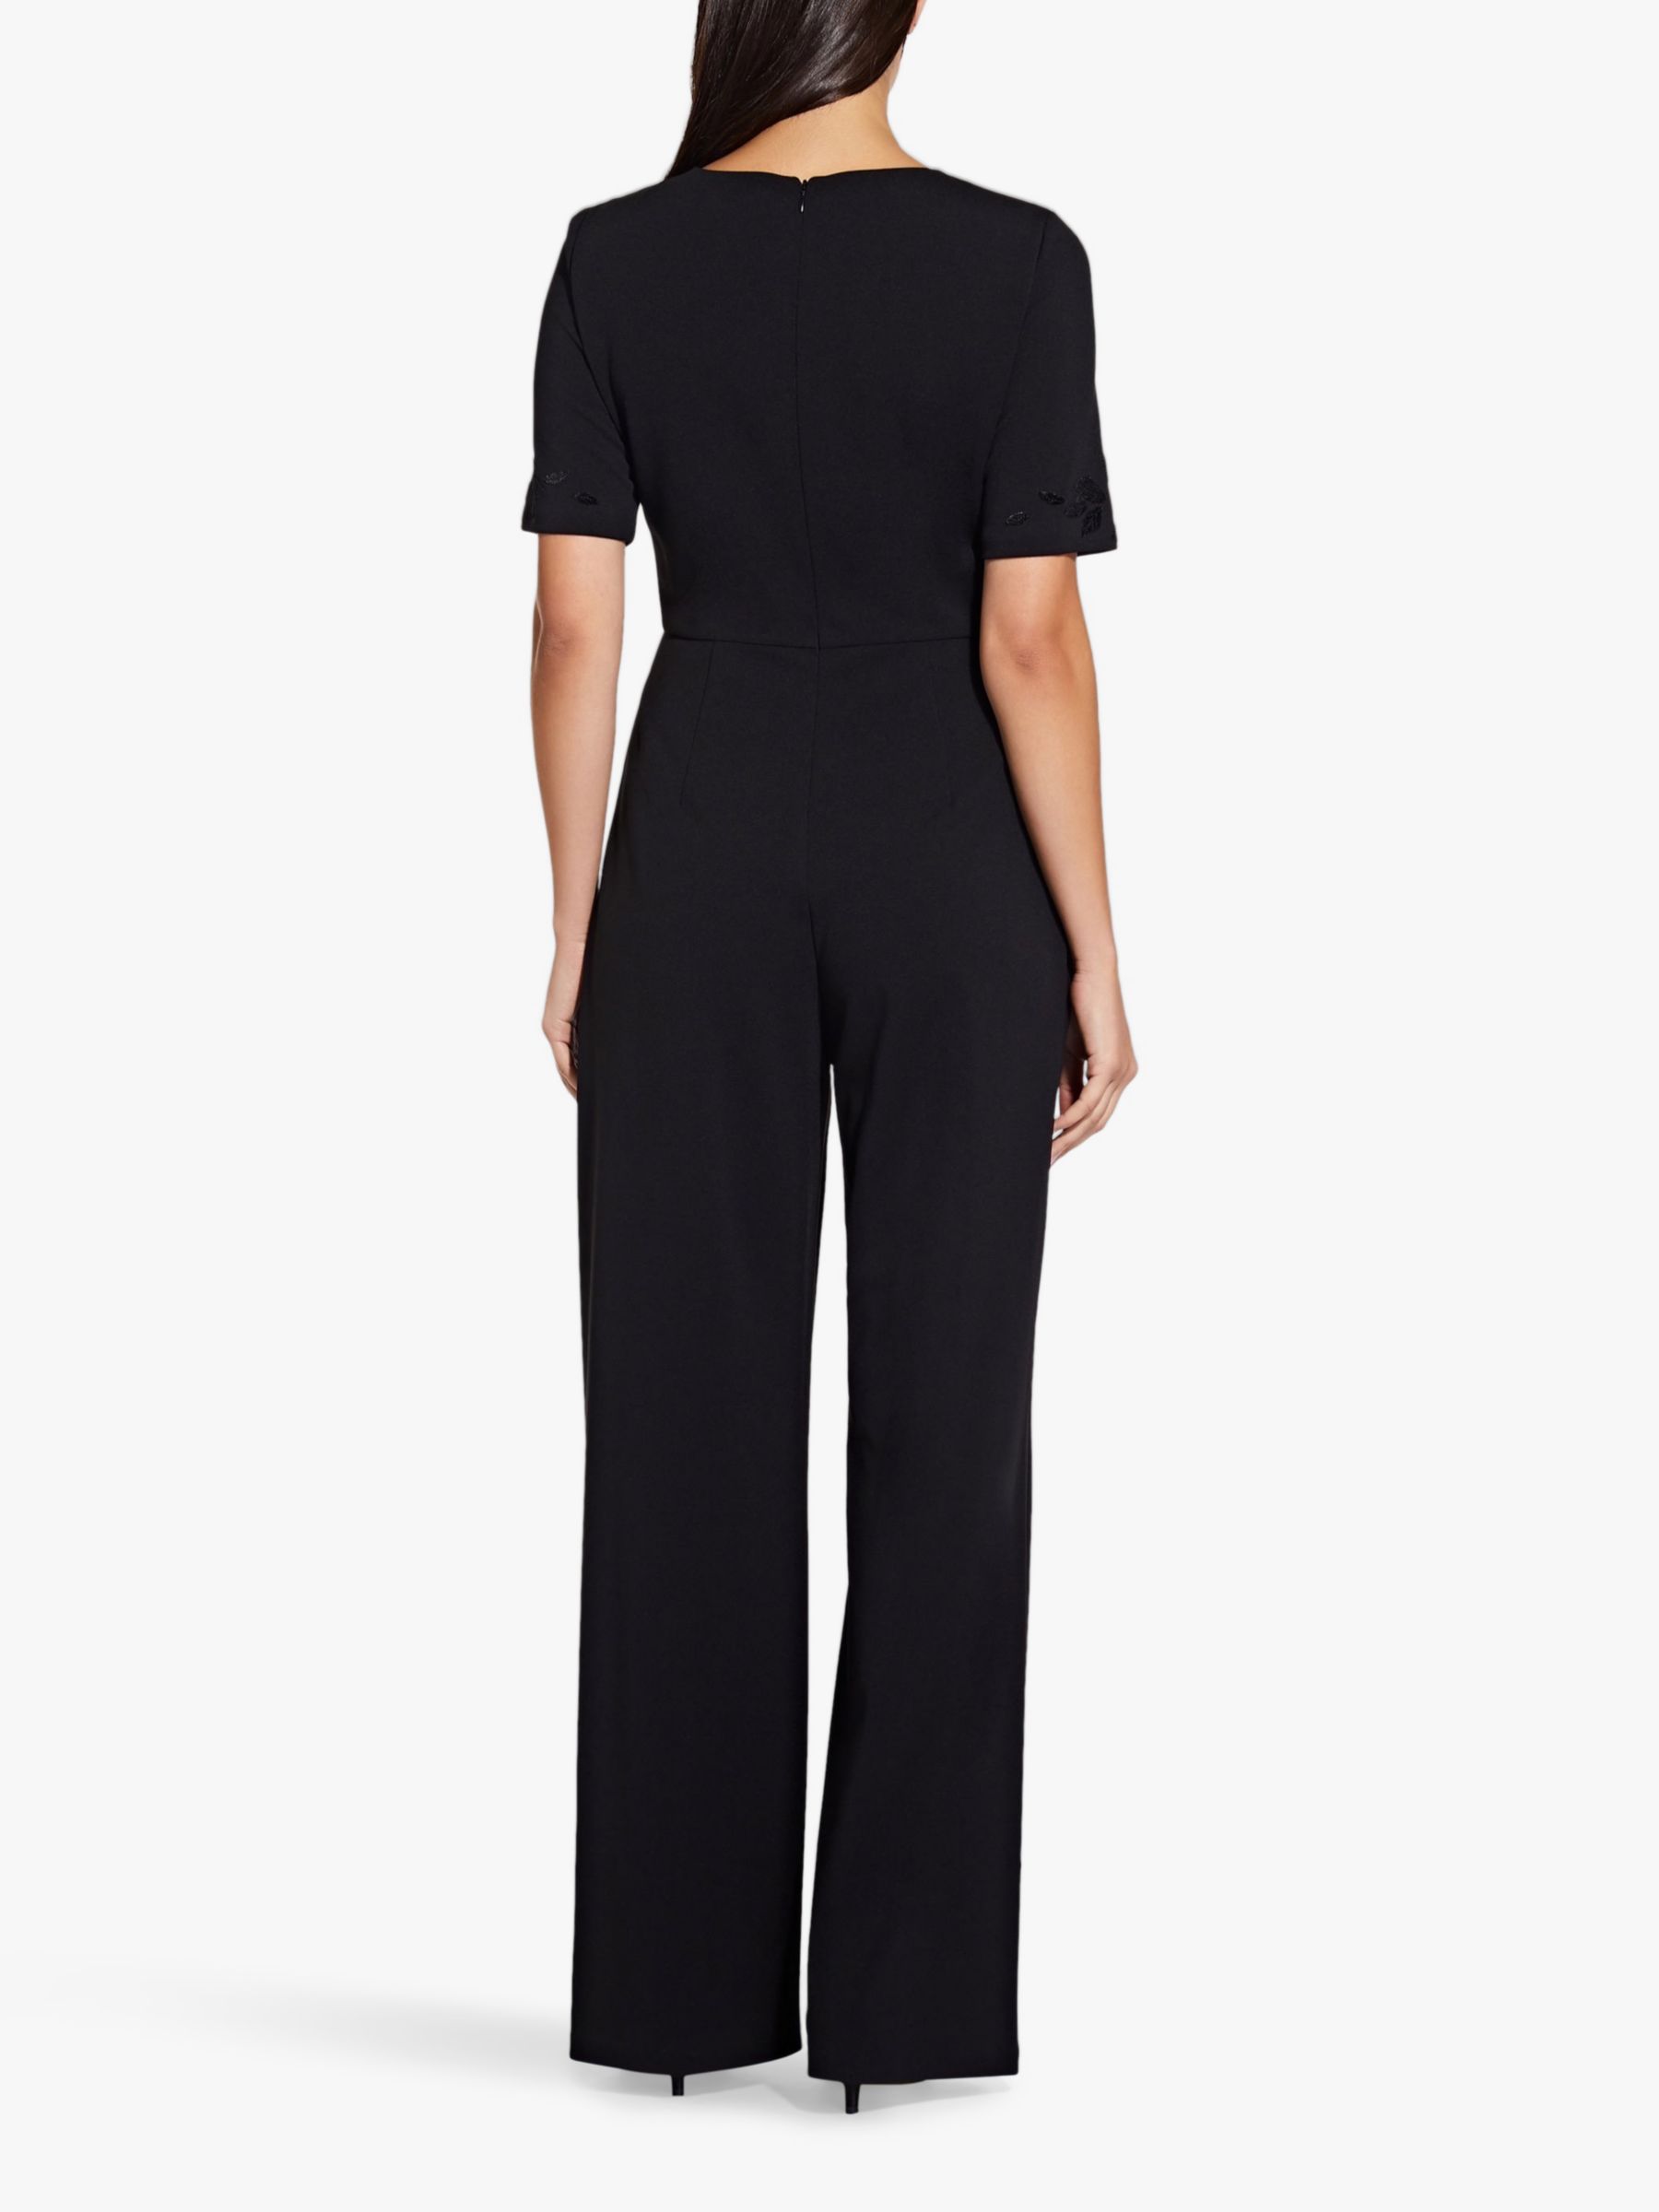 Adrianna Papell Velvet Applique Jumpsuit, Black at John Lewis & Partners